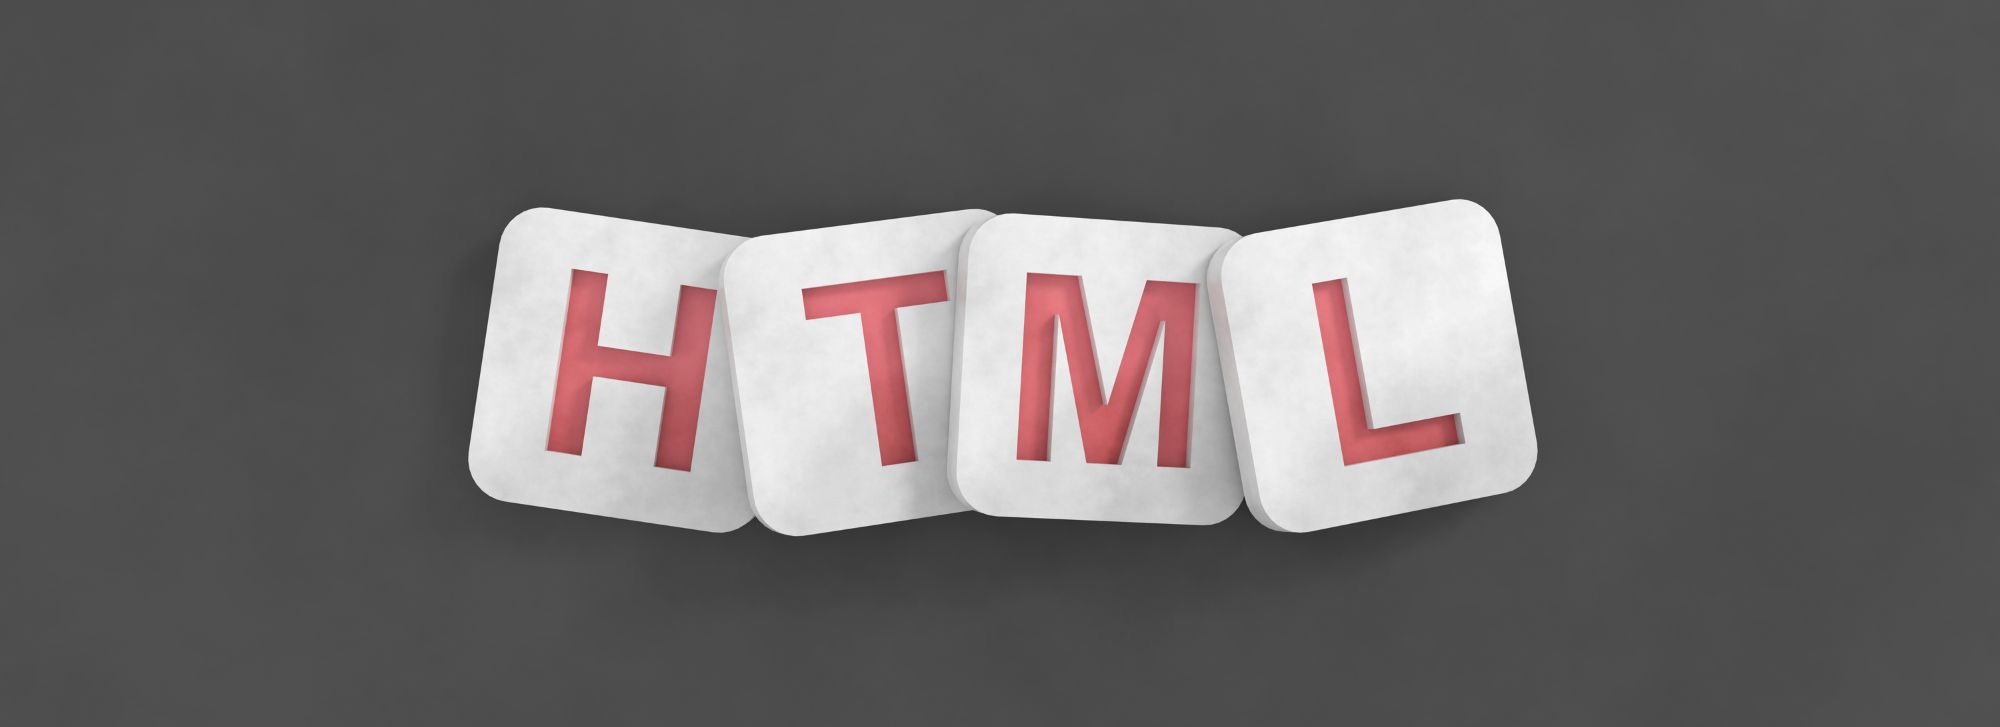 HTML-Website-Designs